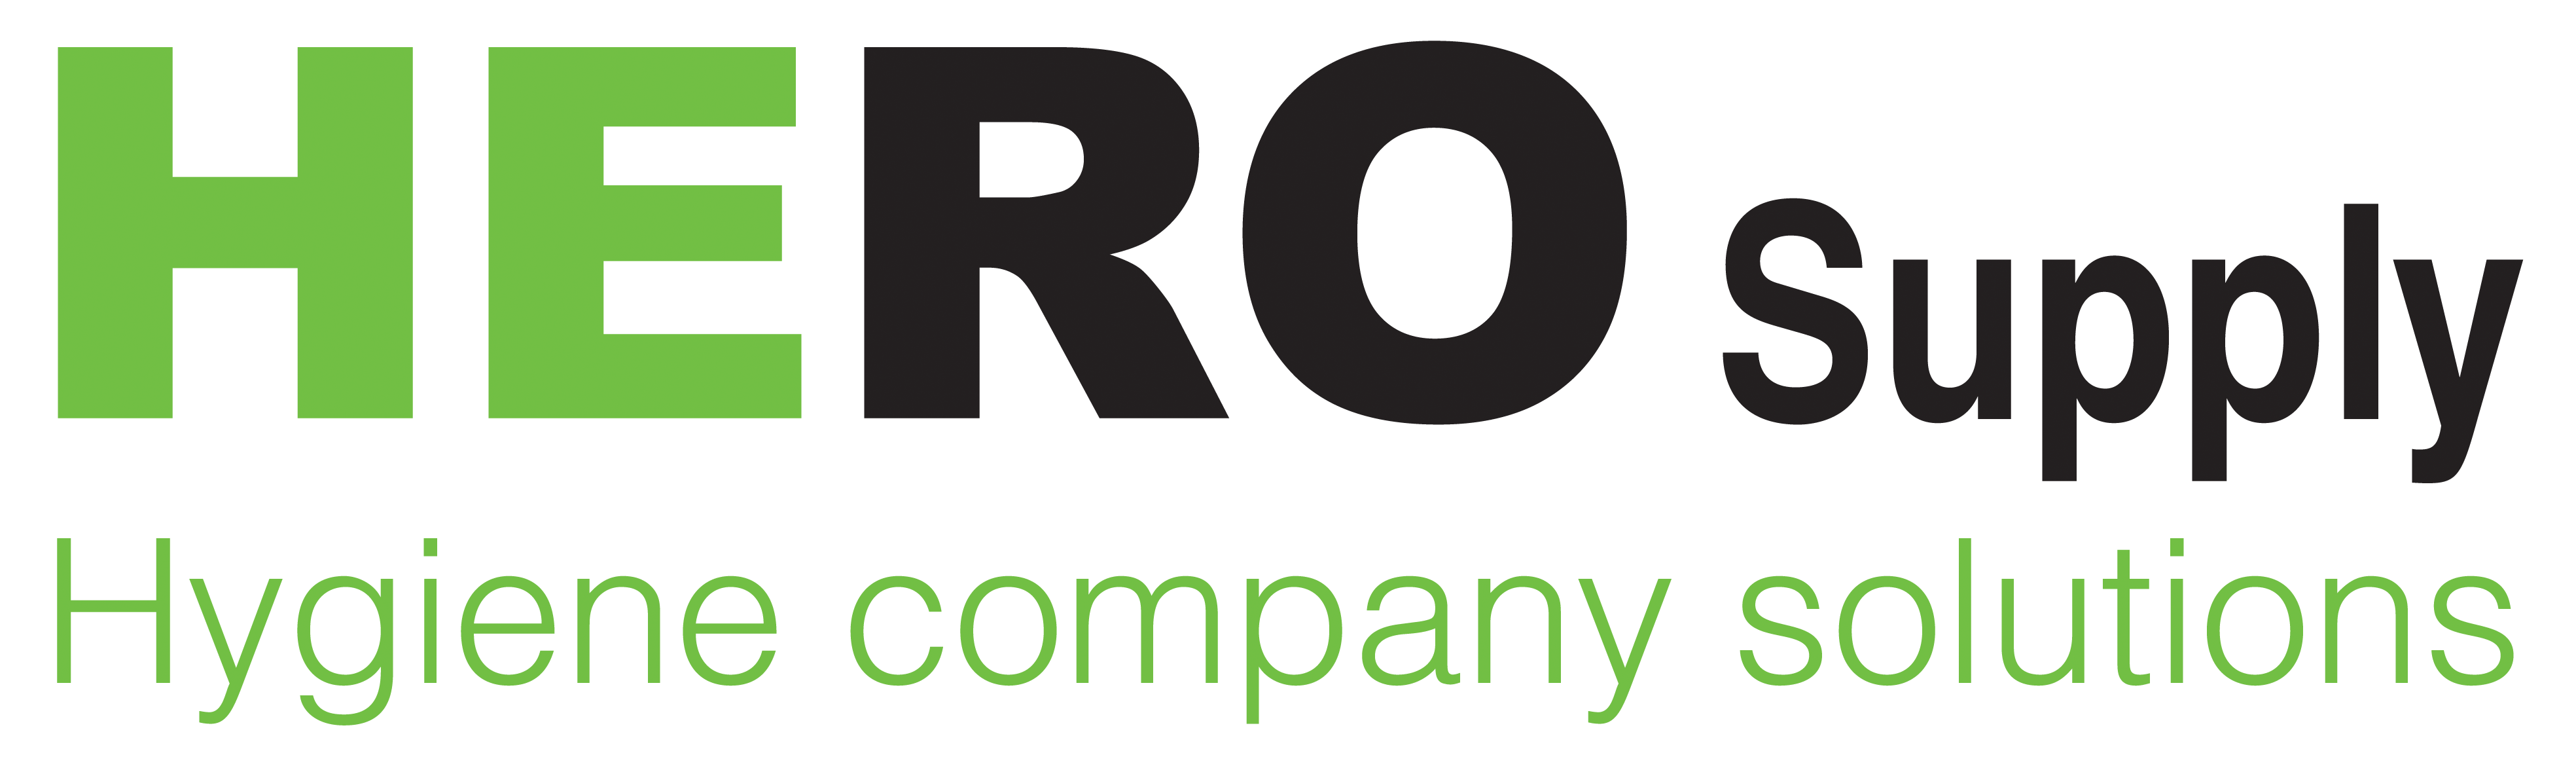 Hero Supply logo